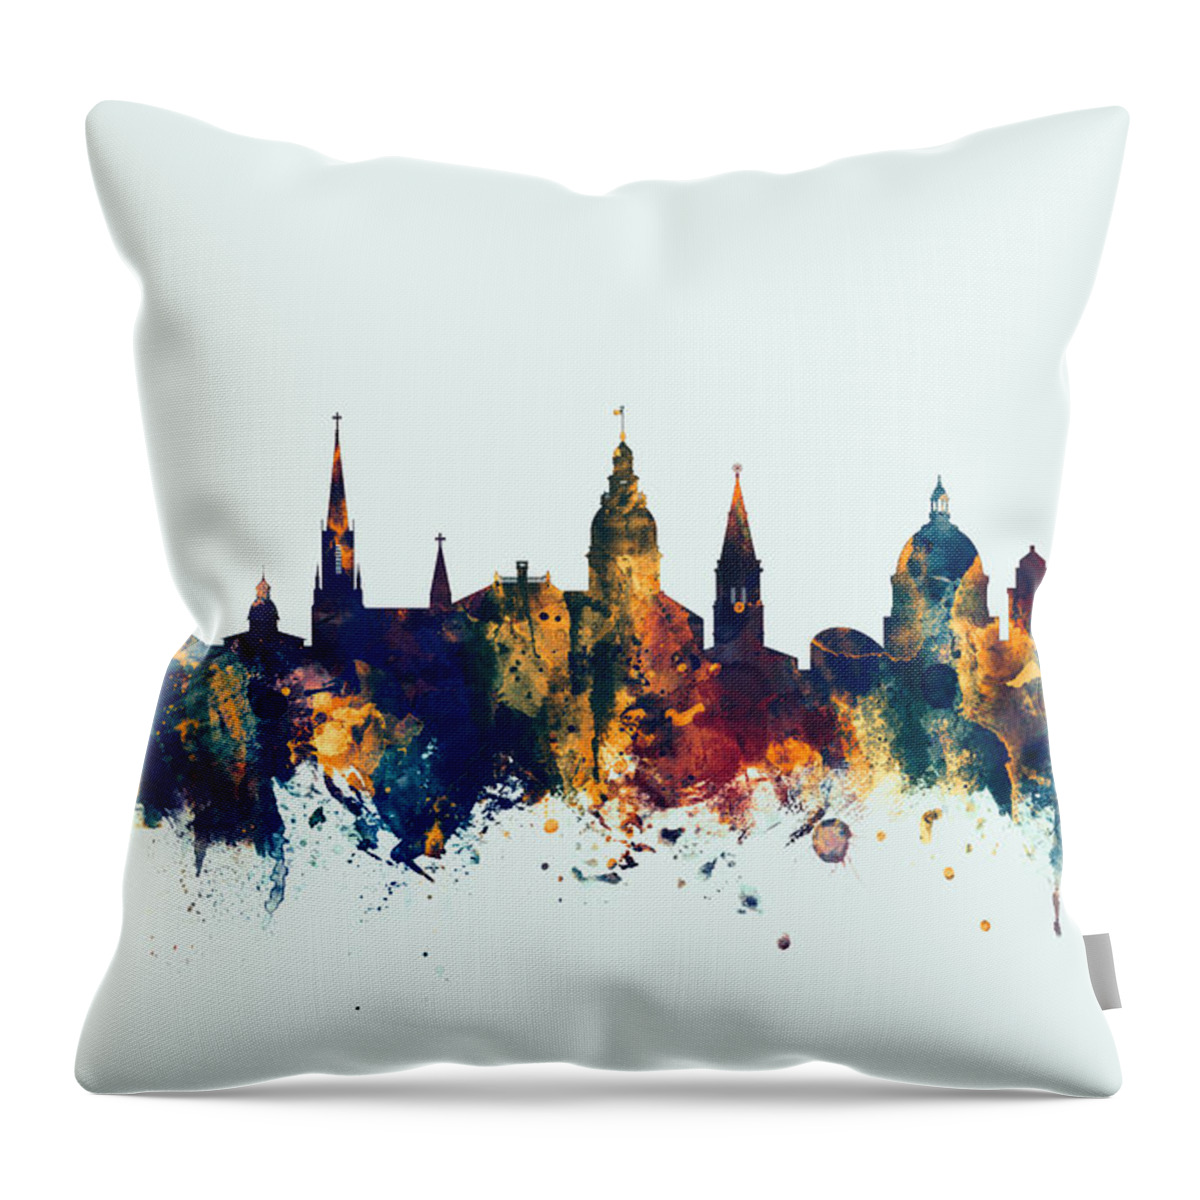 Annapolis Throw Pillow featuring the digital art Annapolis Maryland Skyline #4 by Michael Tompsett